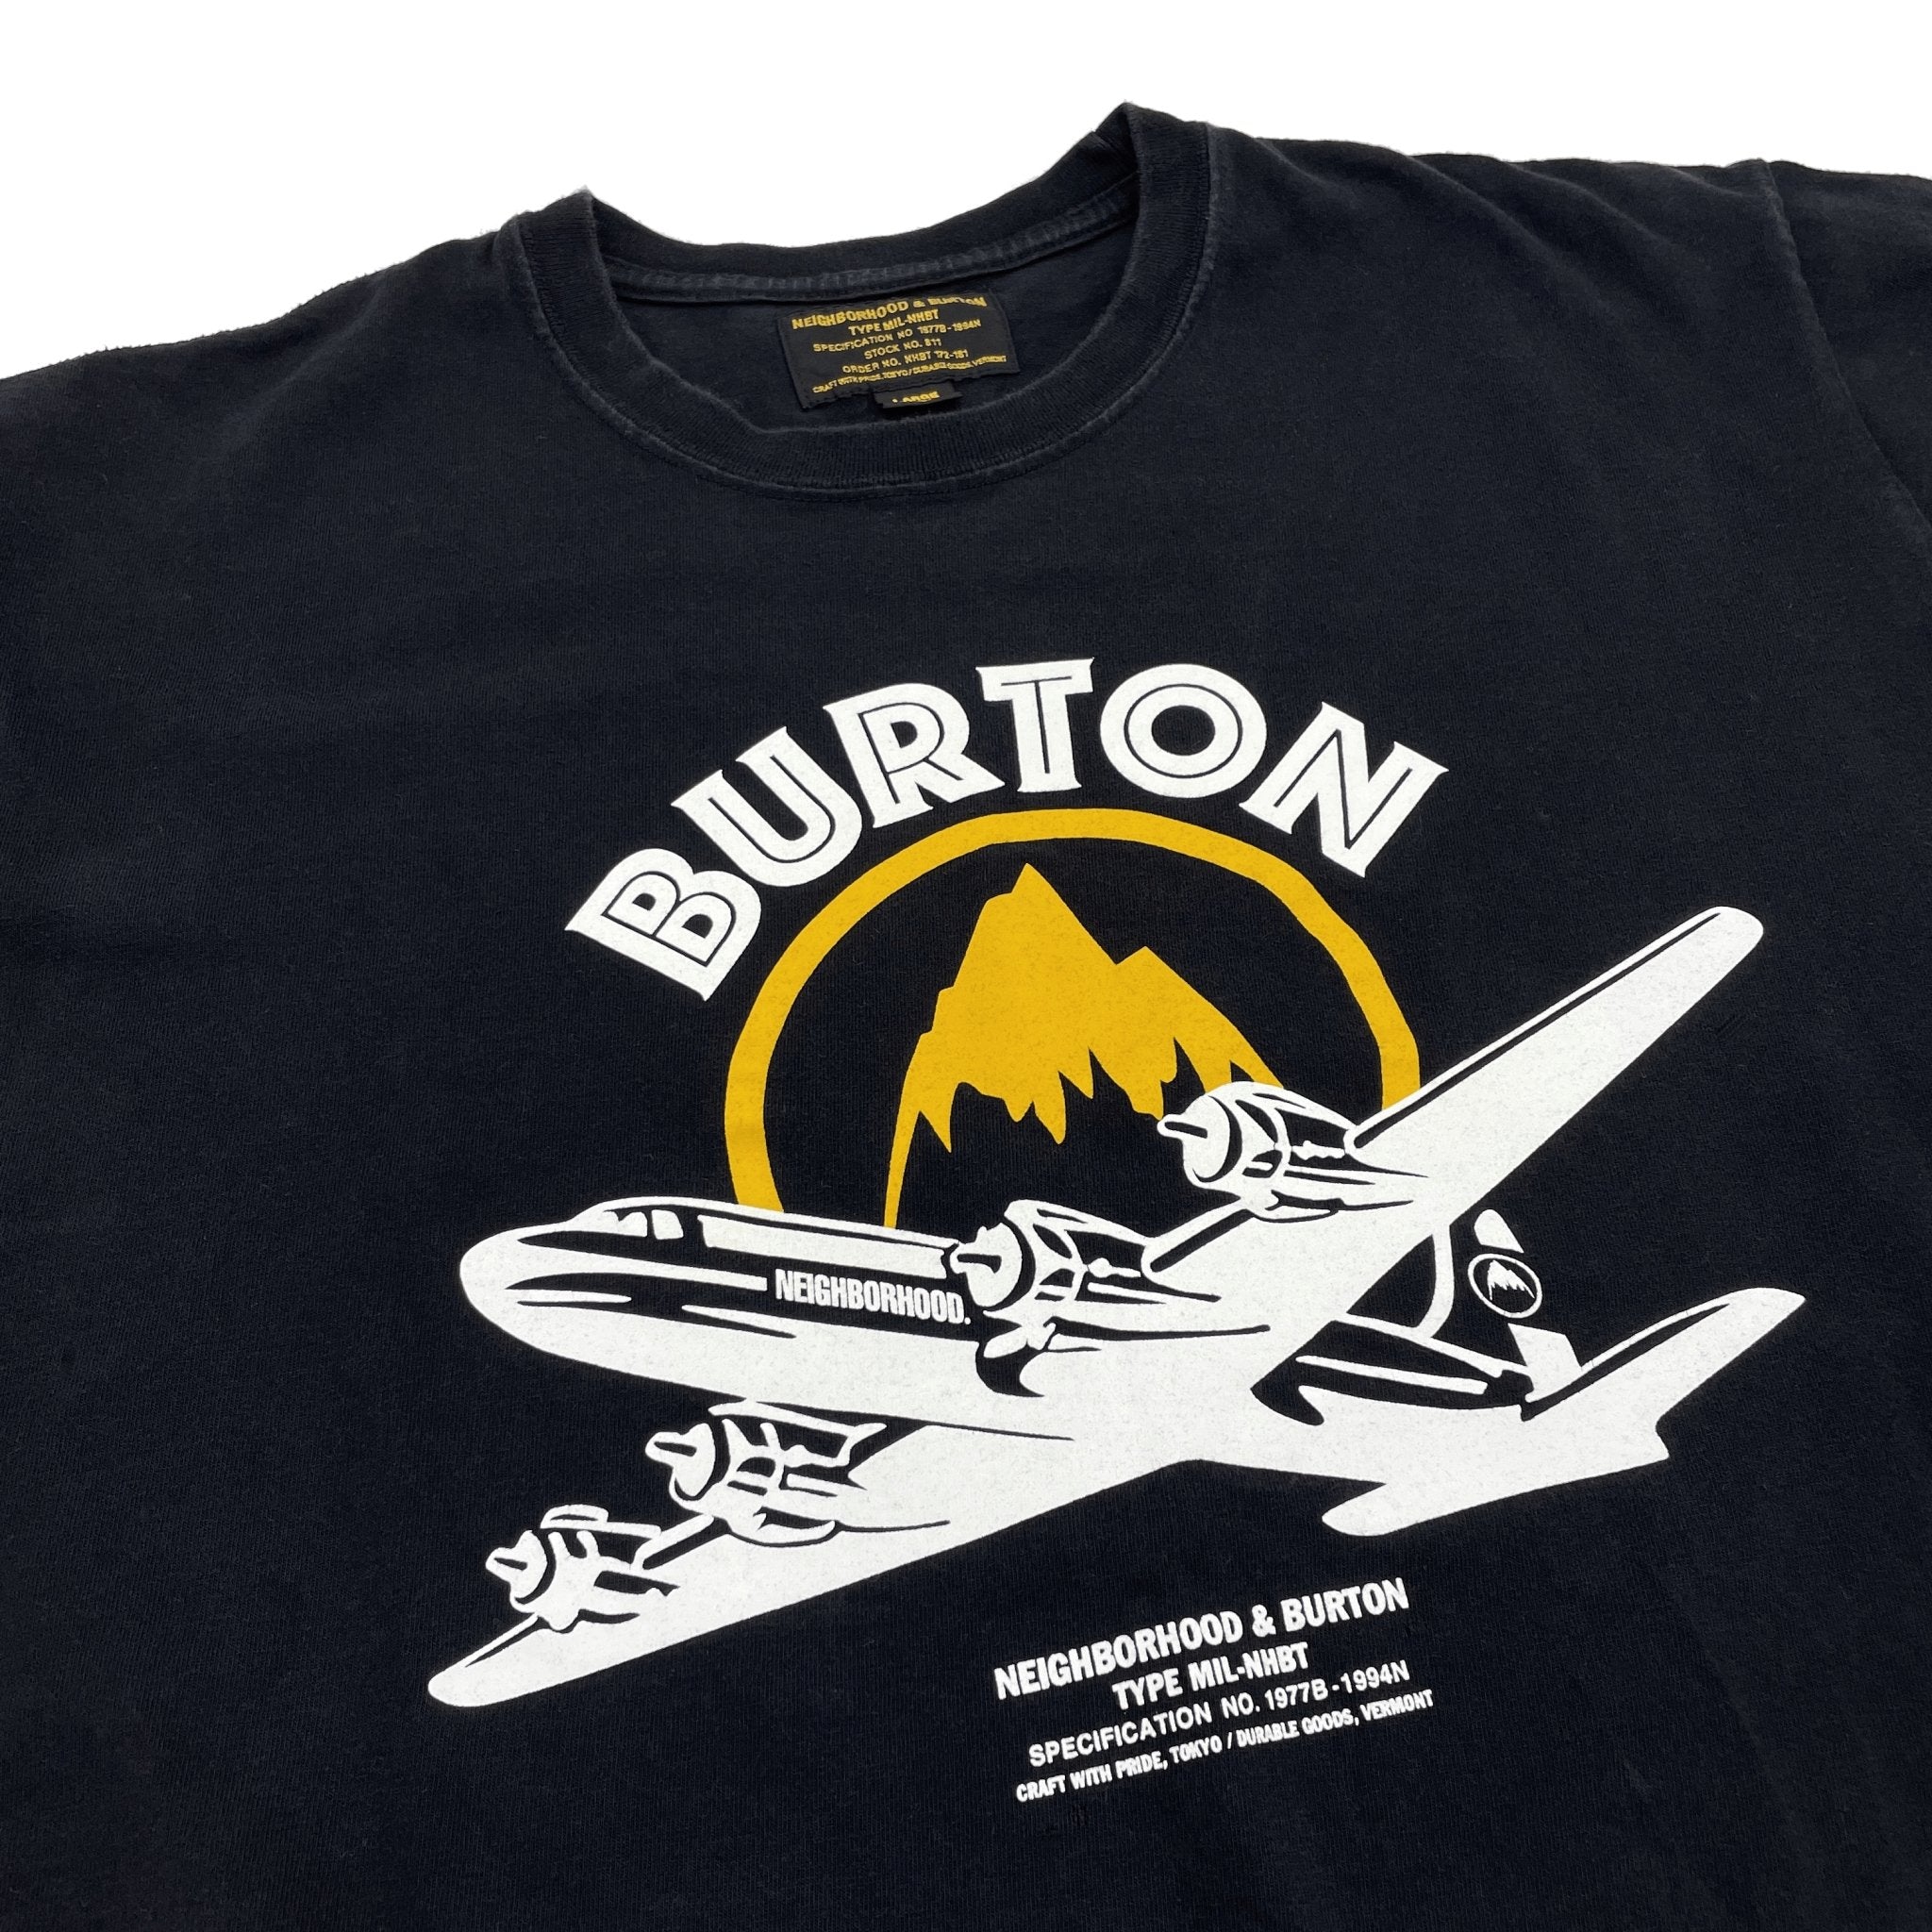 Retro Japan Neighborhood X Burton Collaboration T-2 Tee Shirt